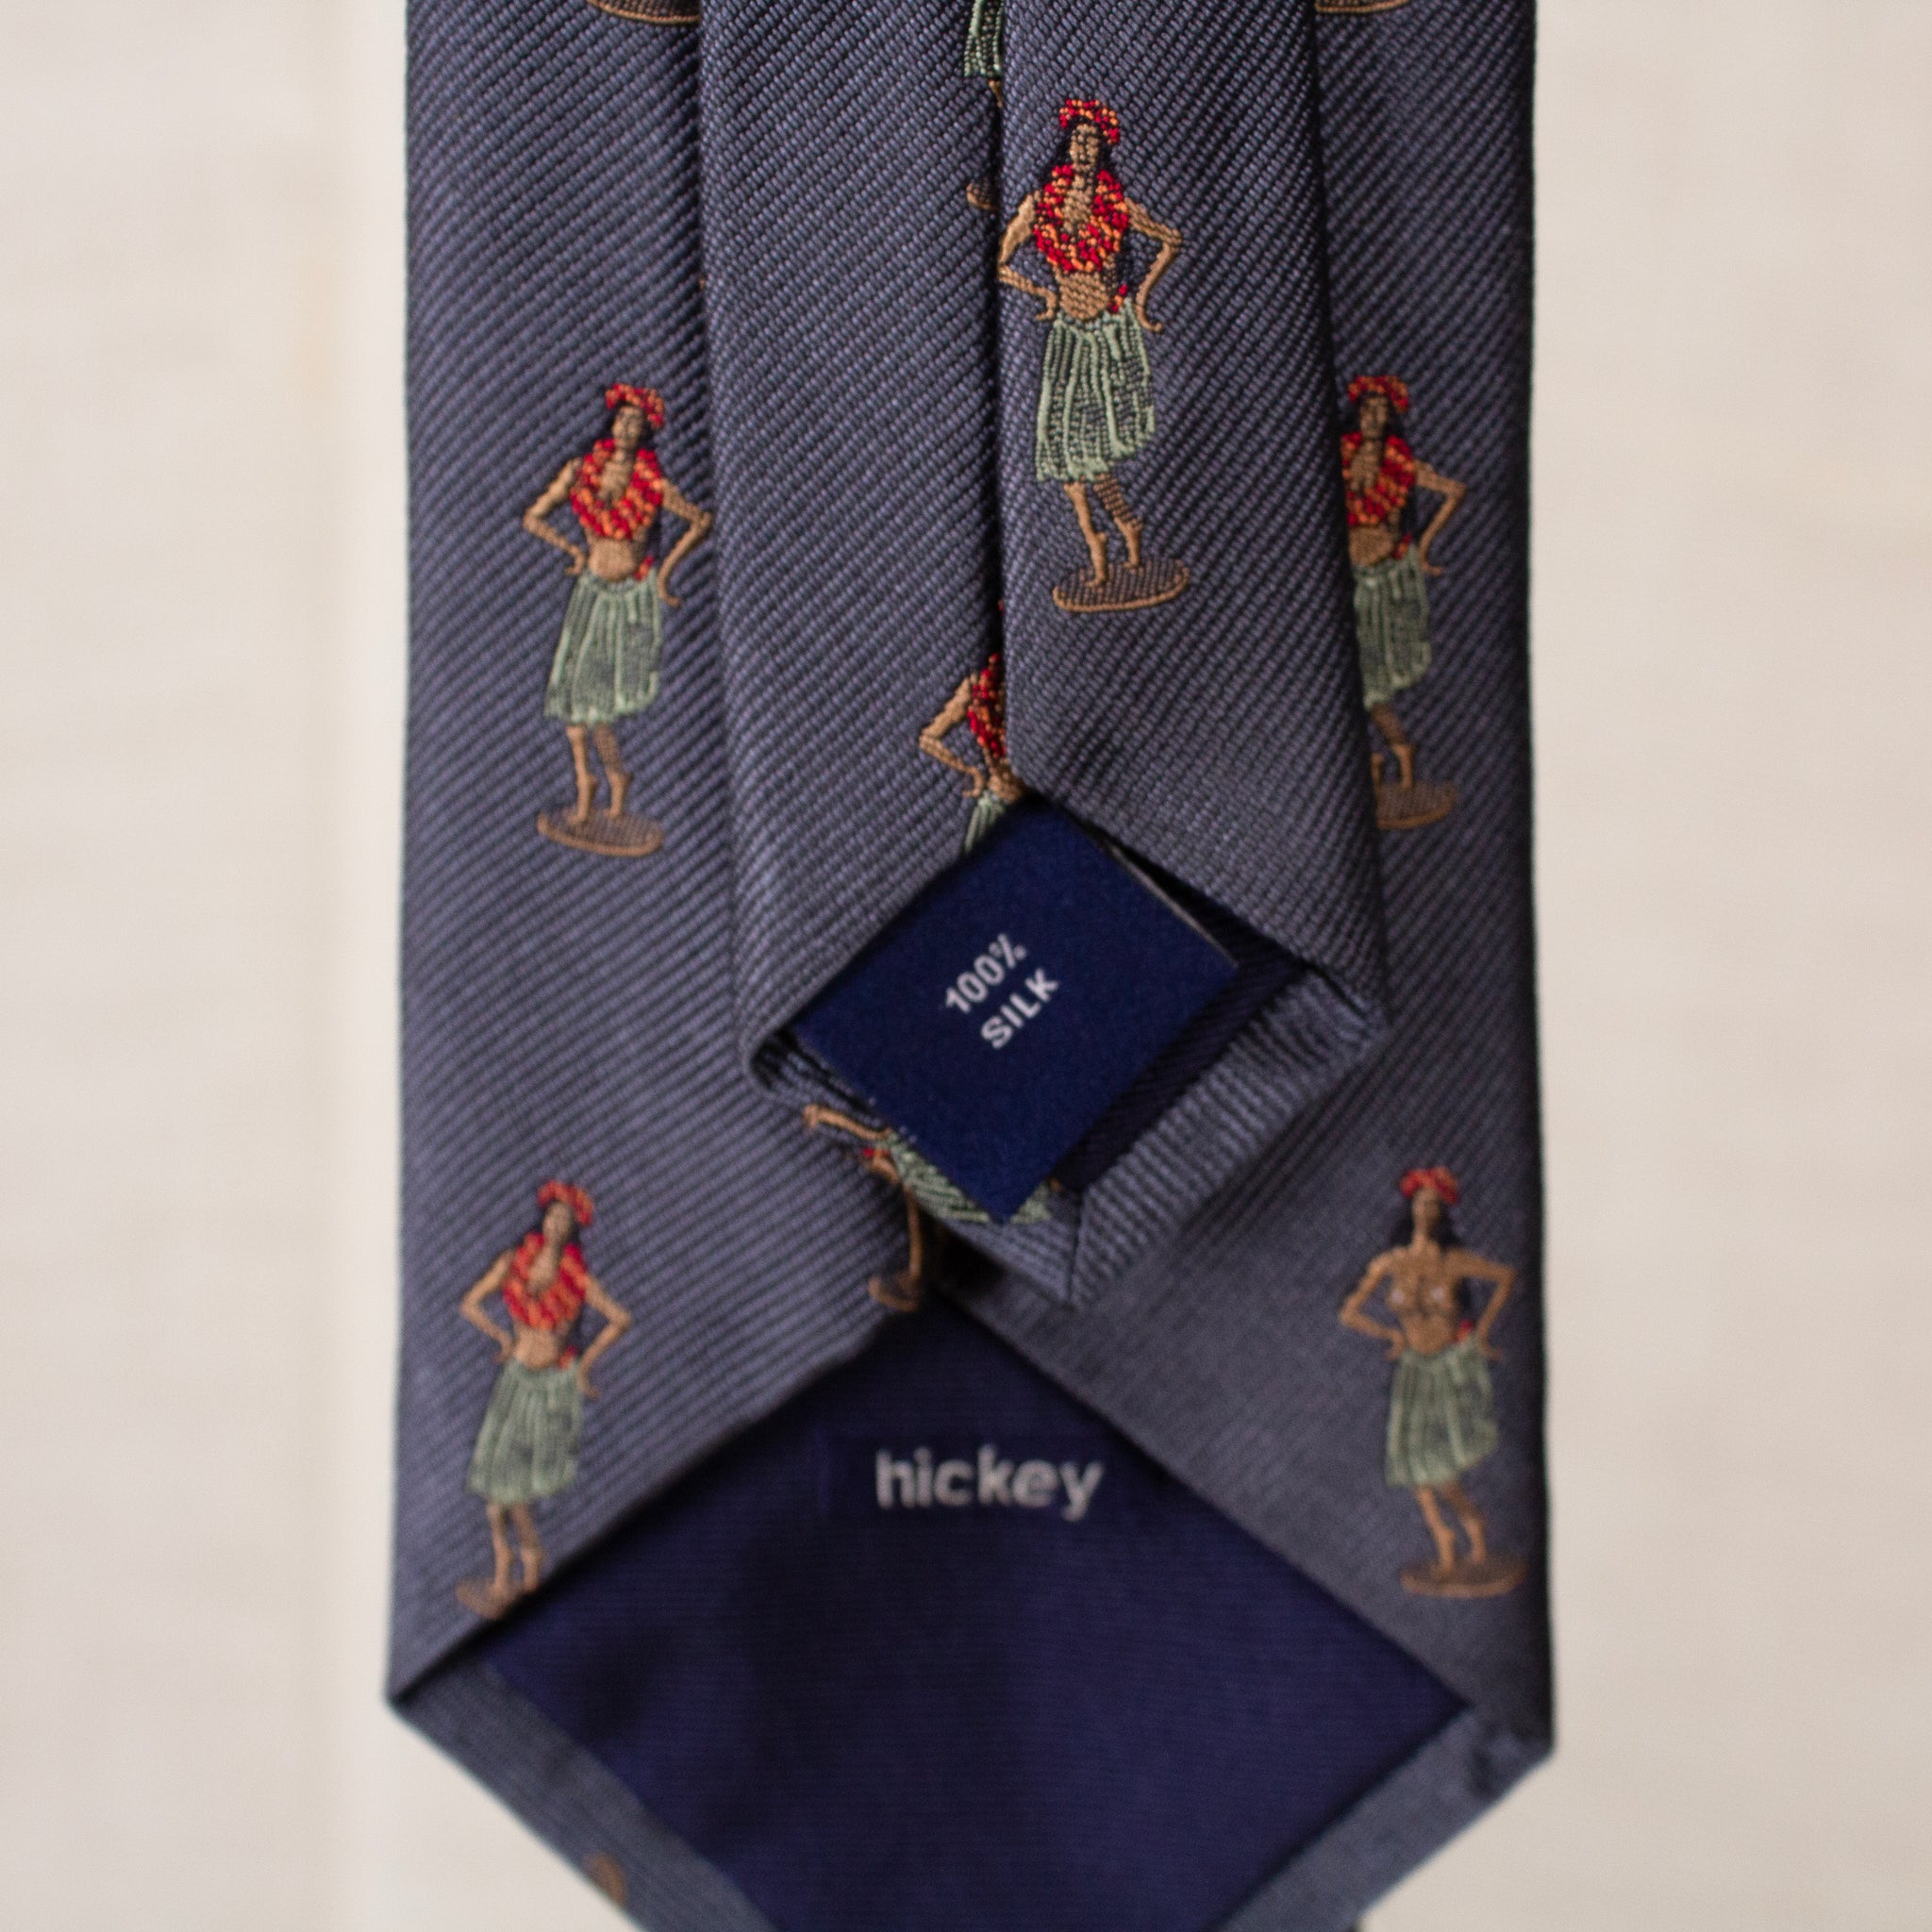 Hickey Hula Girl Tie